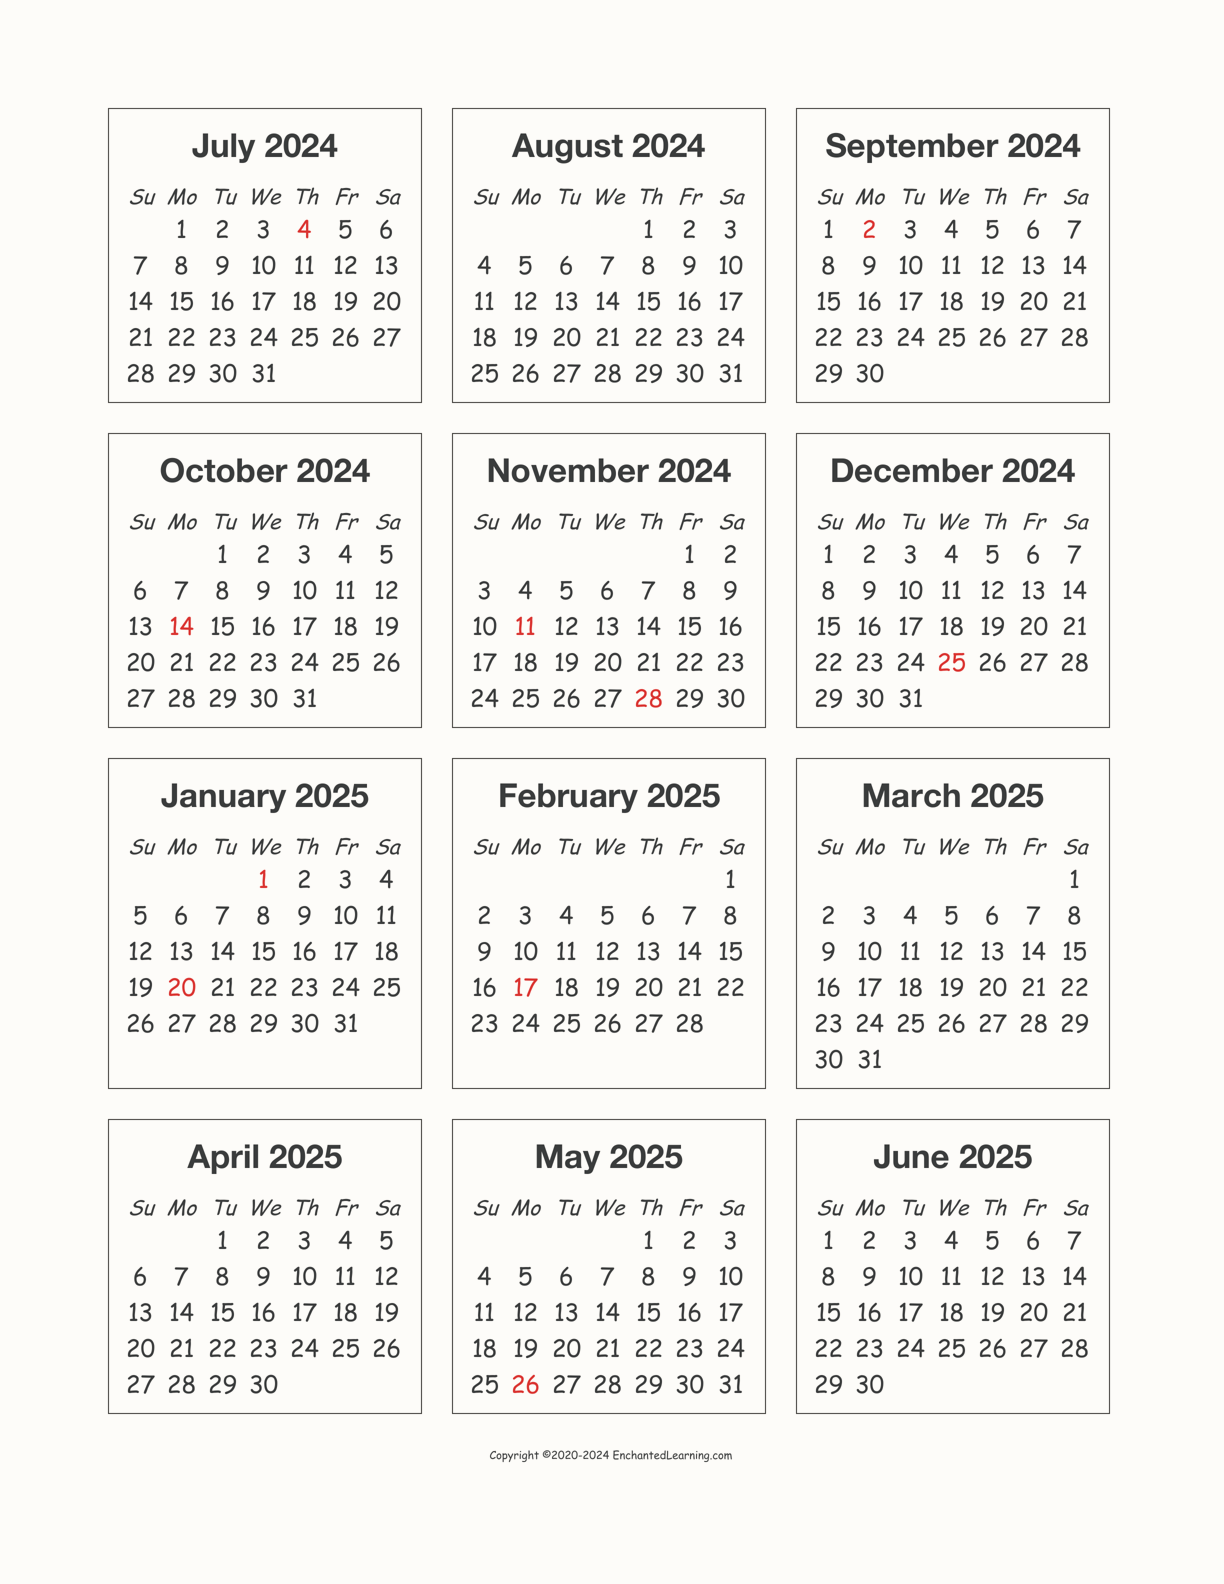 2023-2024-2025-calendar-printable-free-online-calendar-images